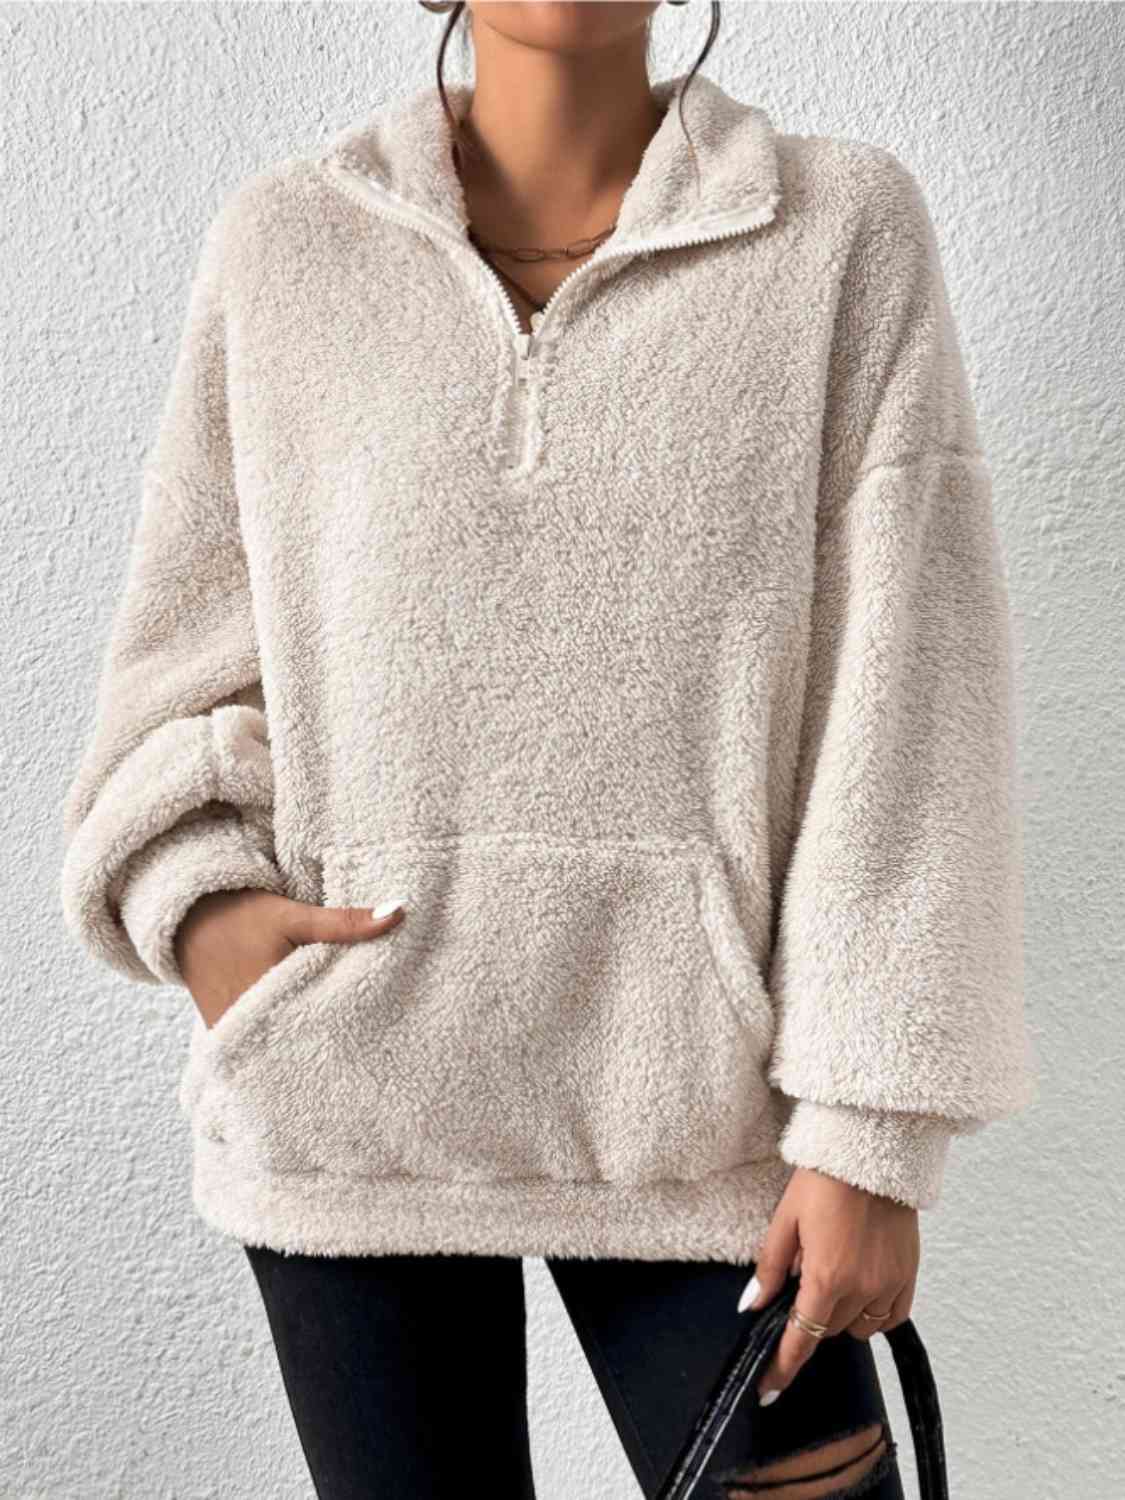 Half Zip Drop Shoulder Sweatshirt with Pocket - Fashion Girl Online Store